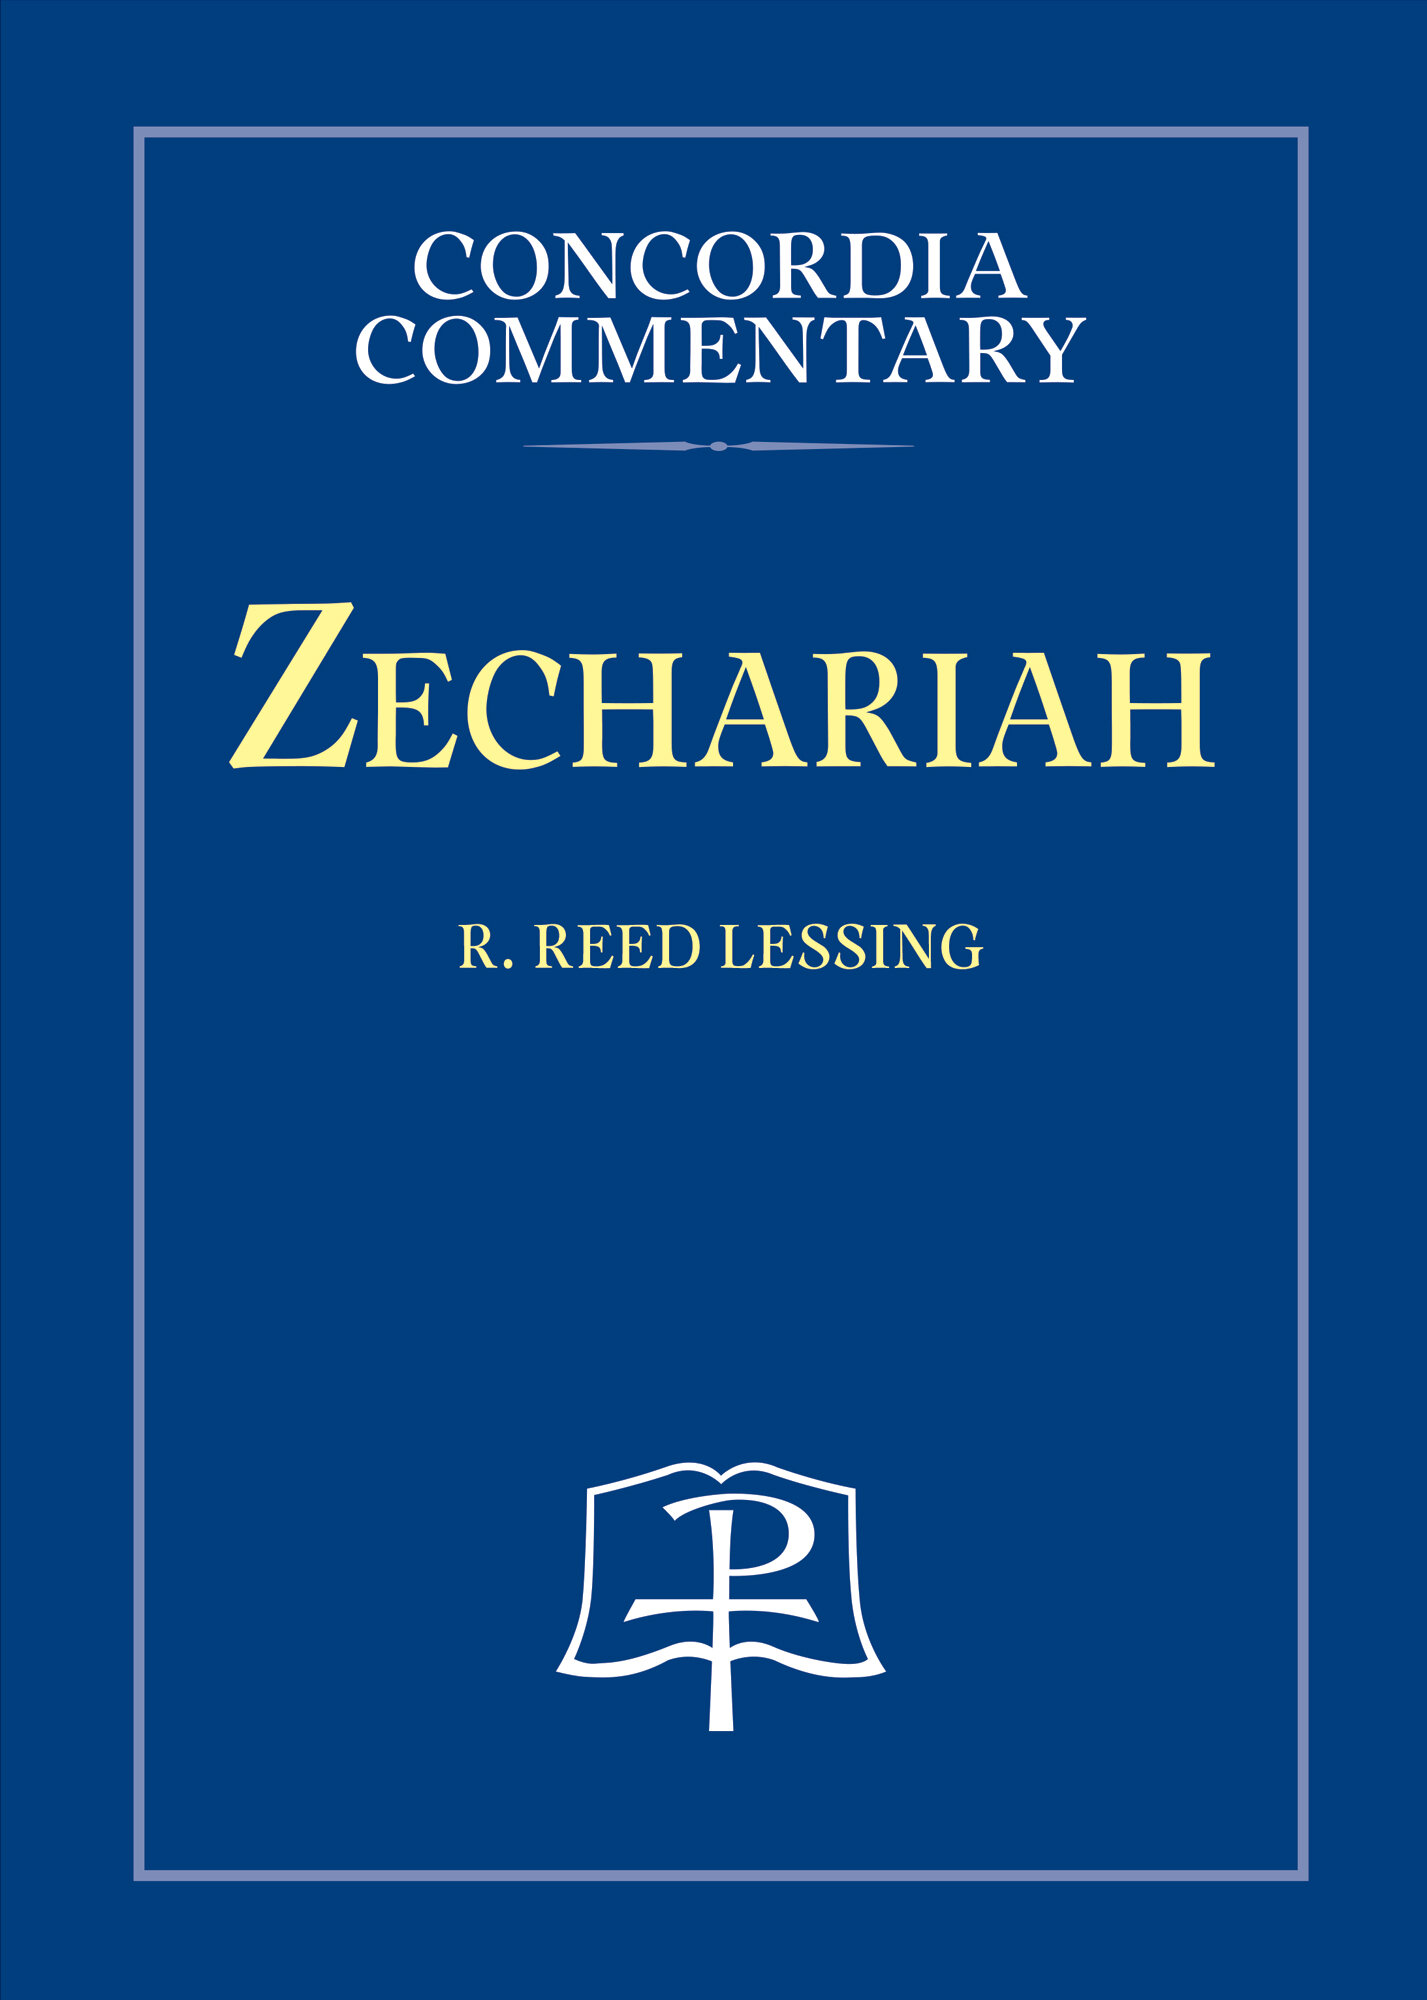 zechariah bible